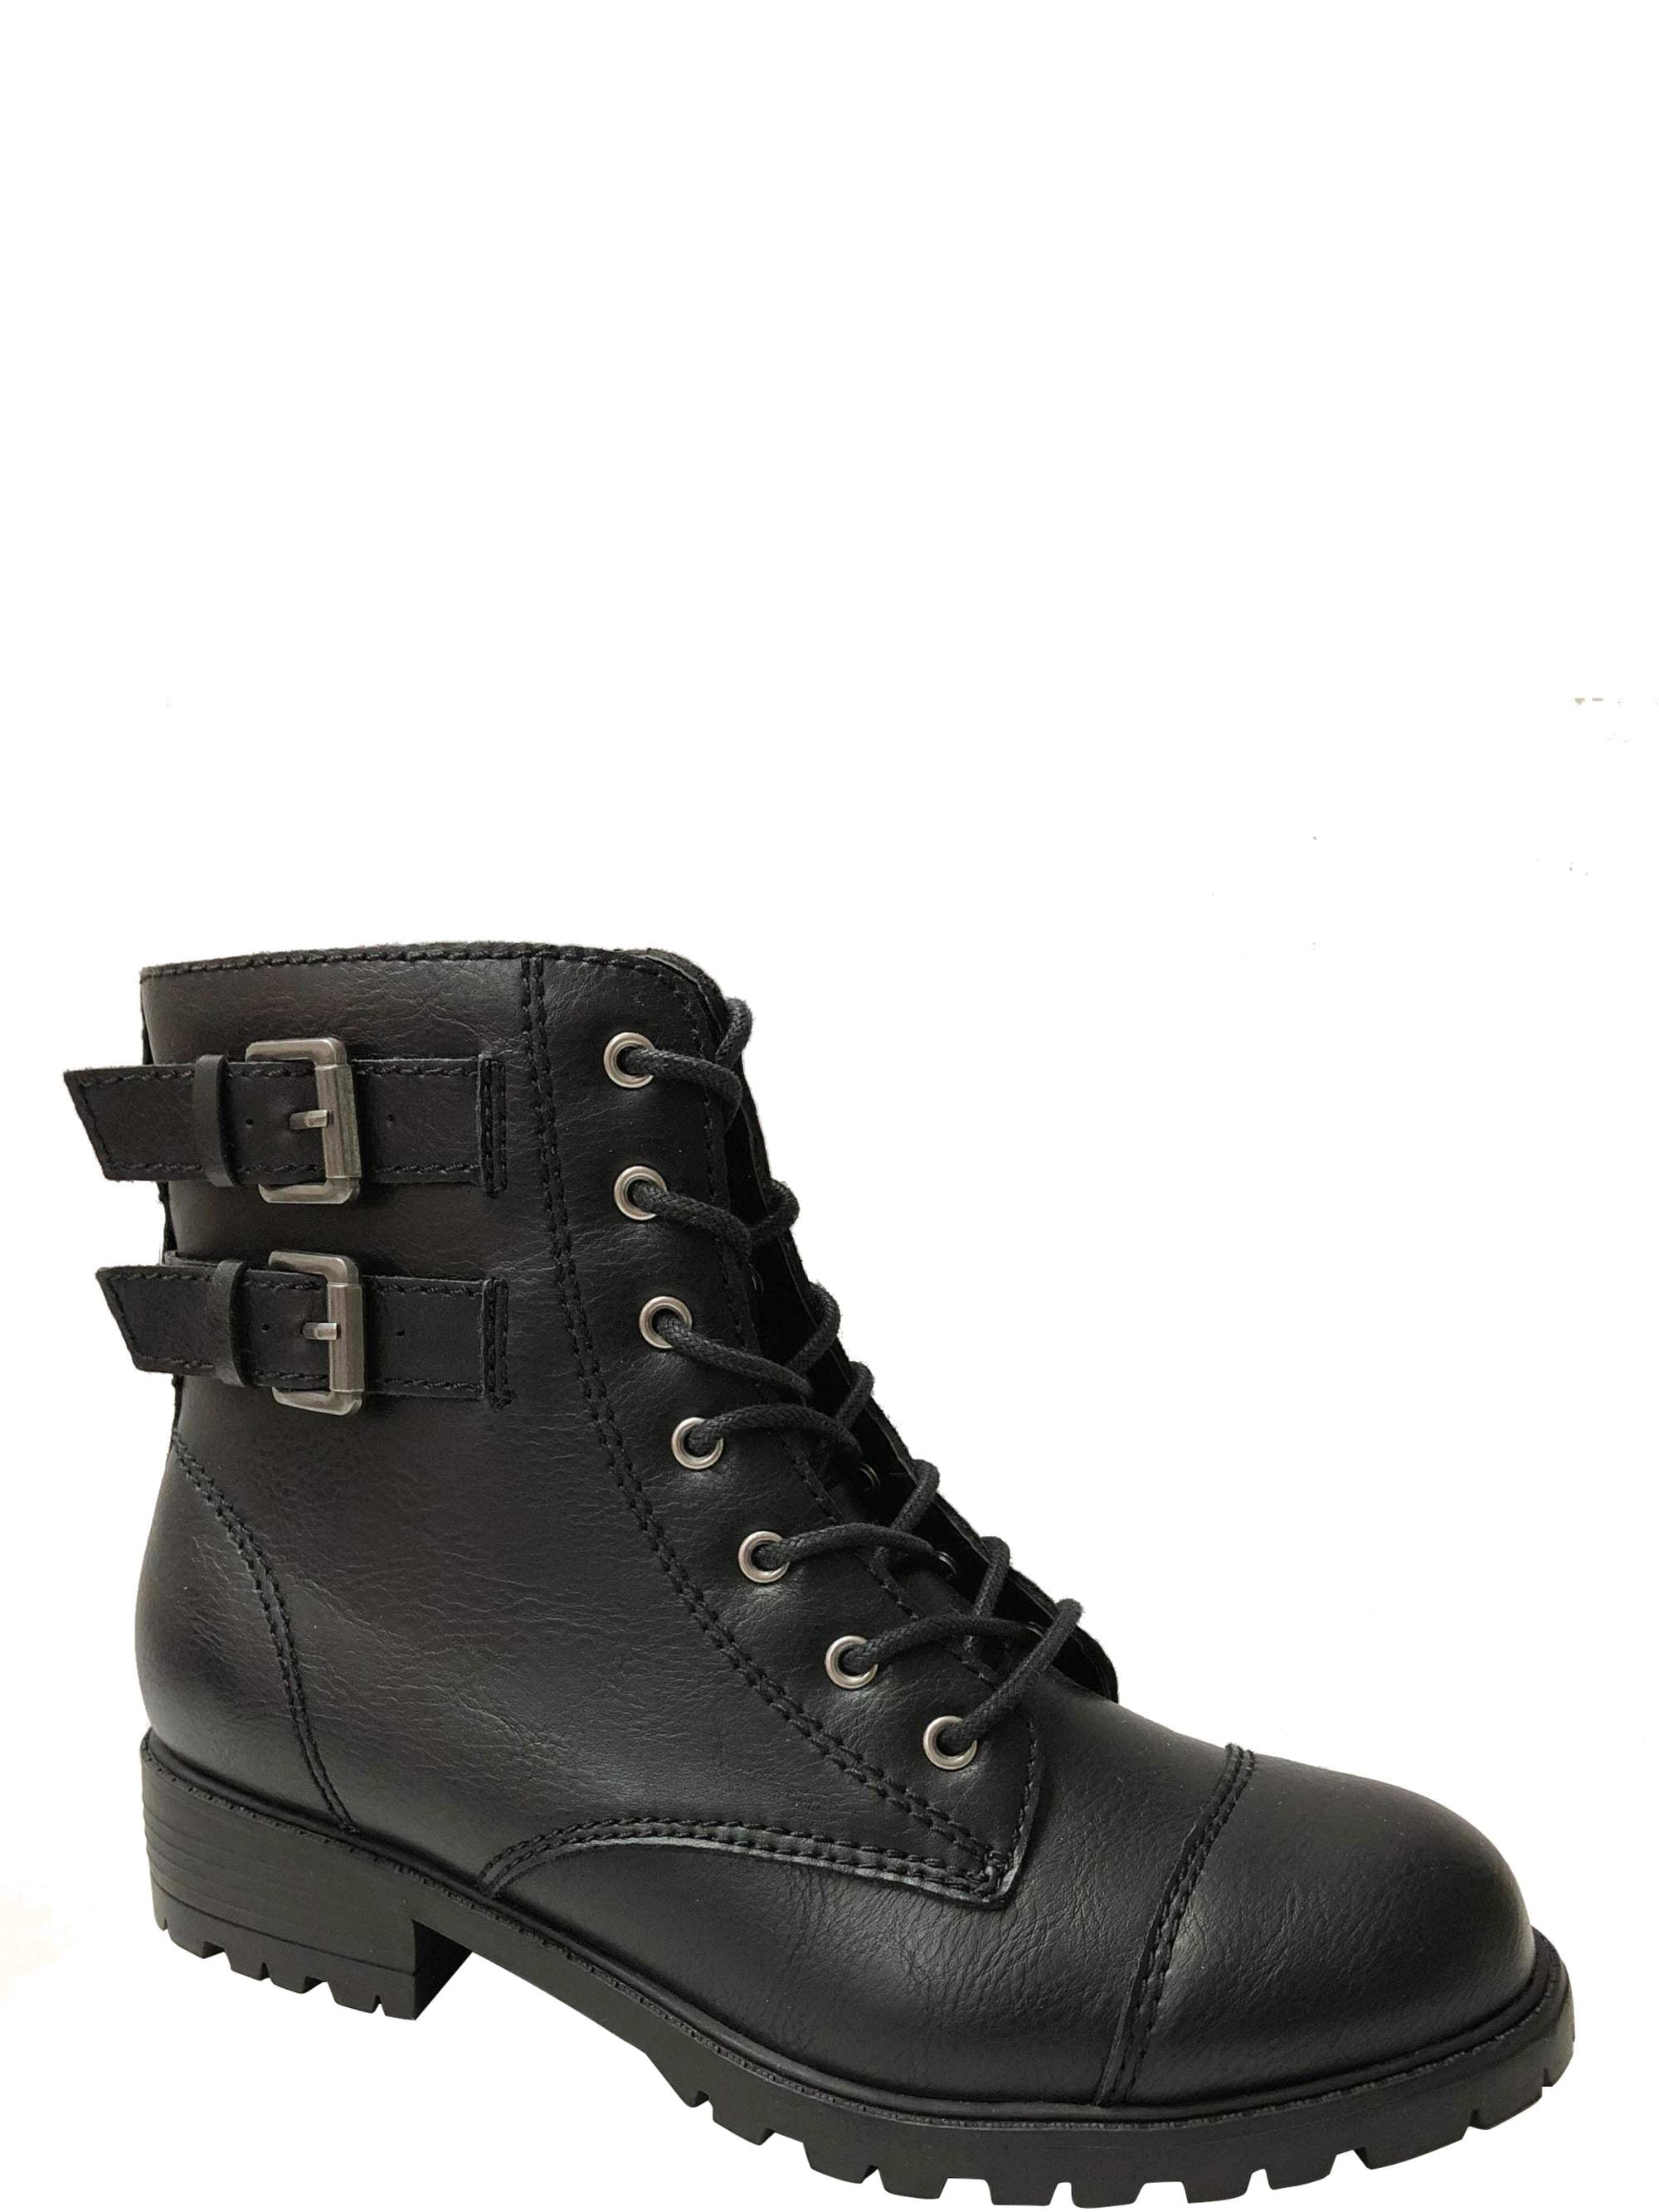 black boots for little girls